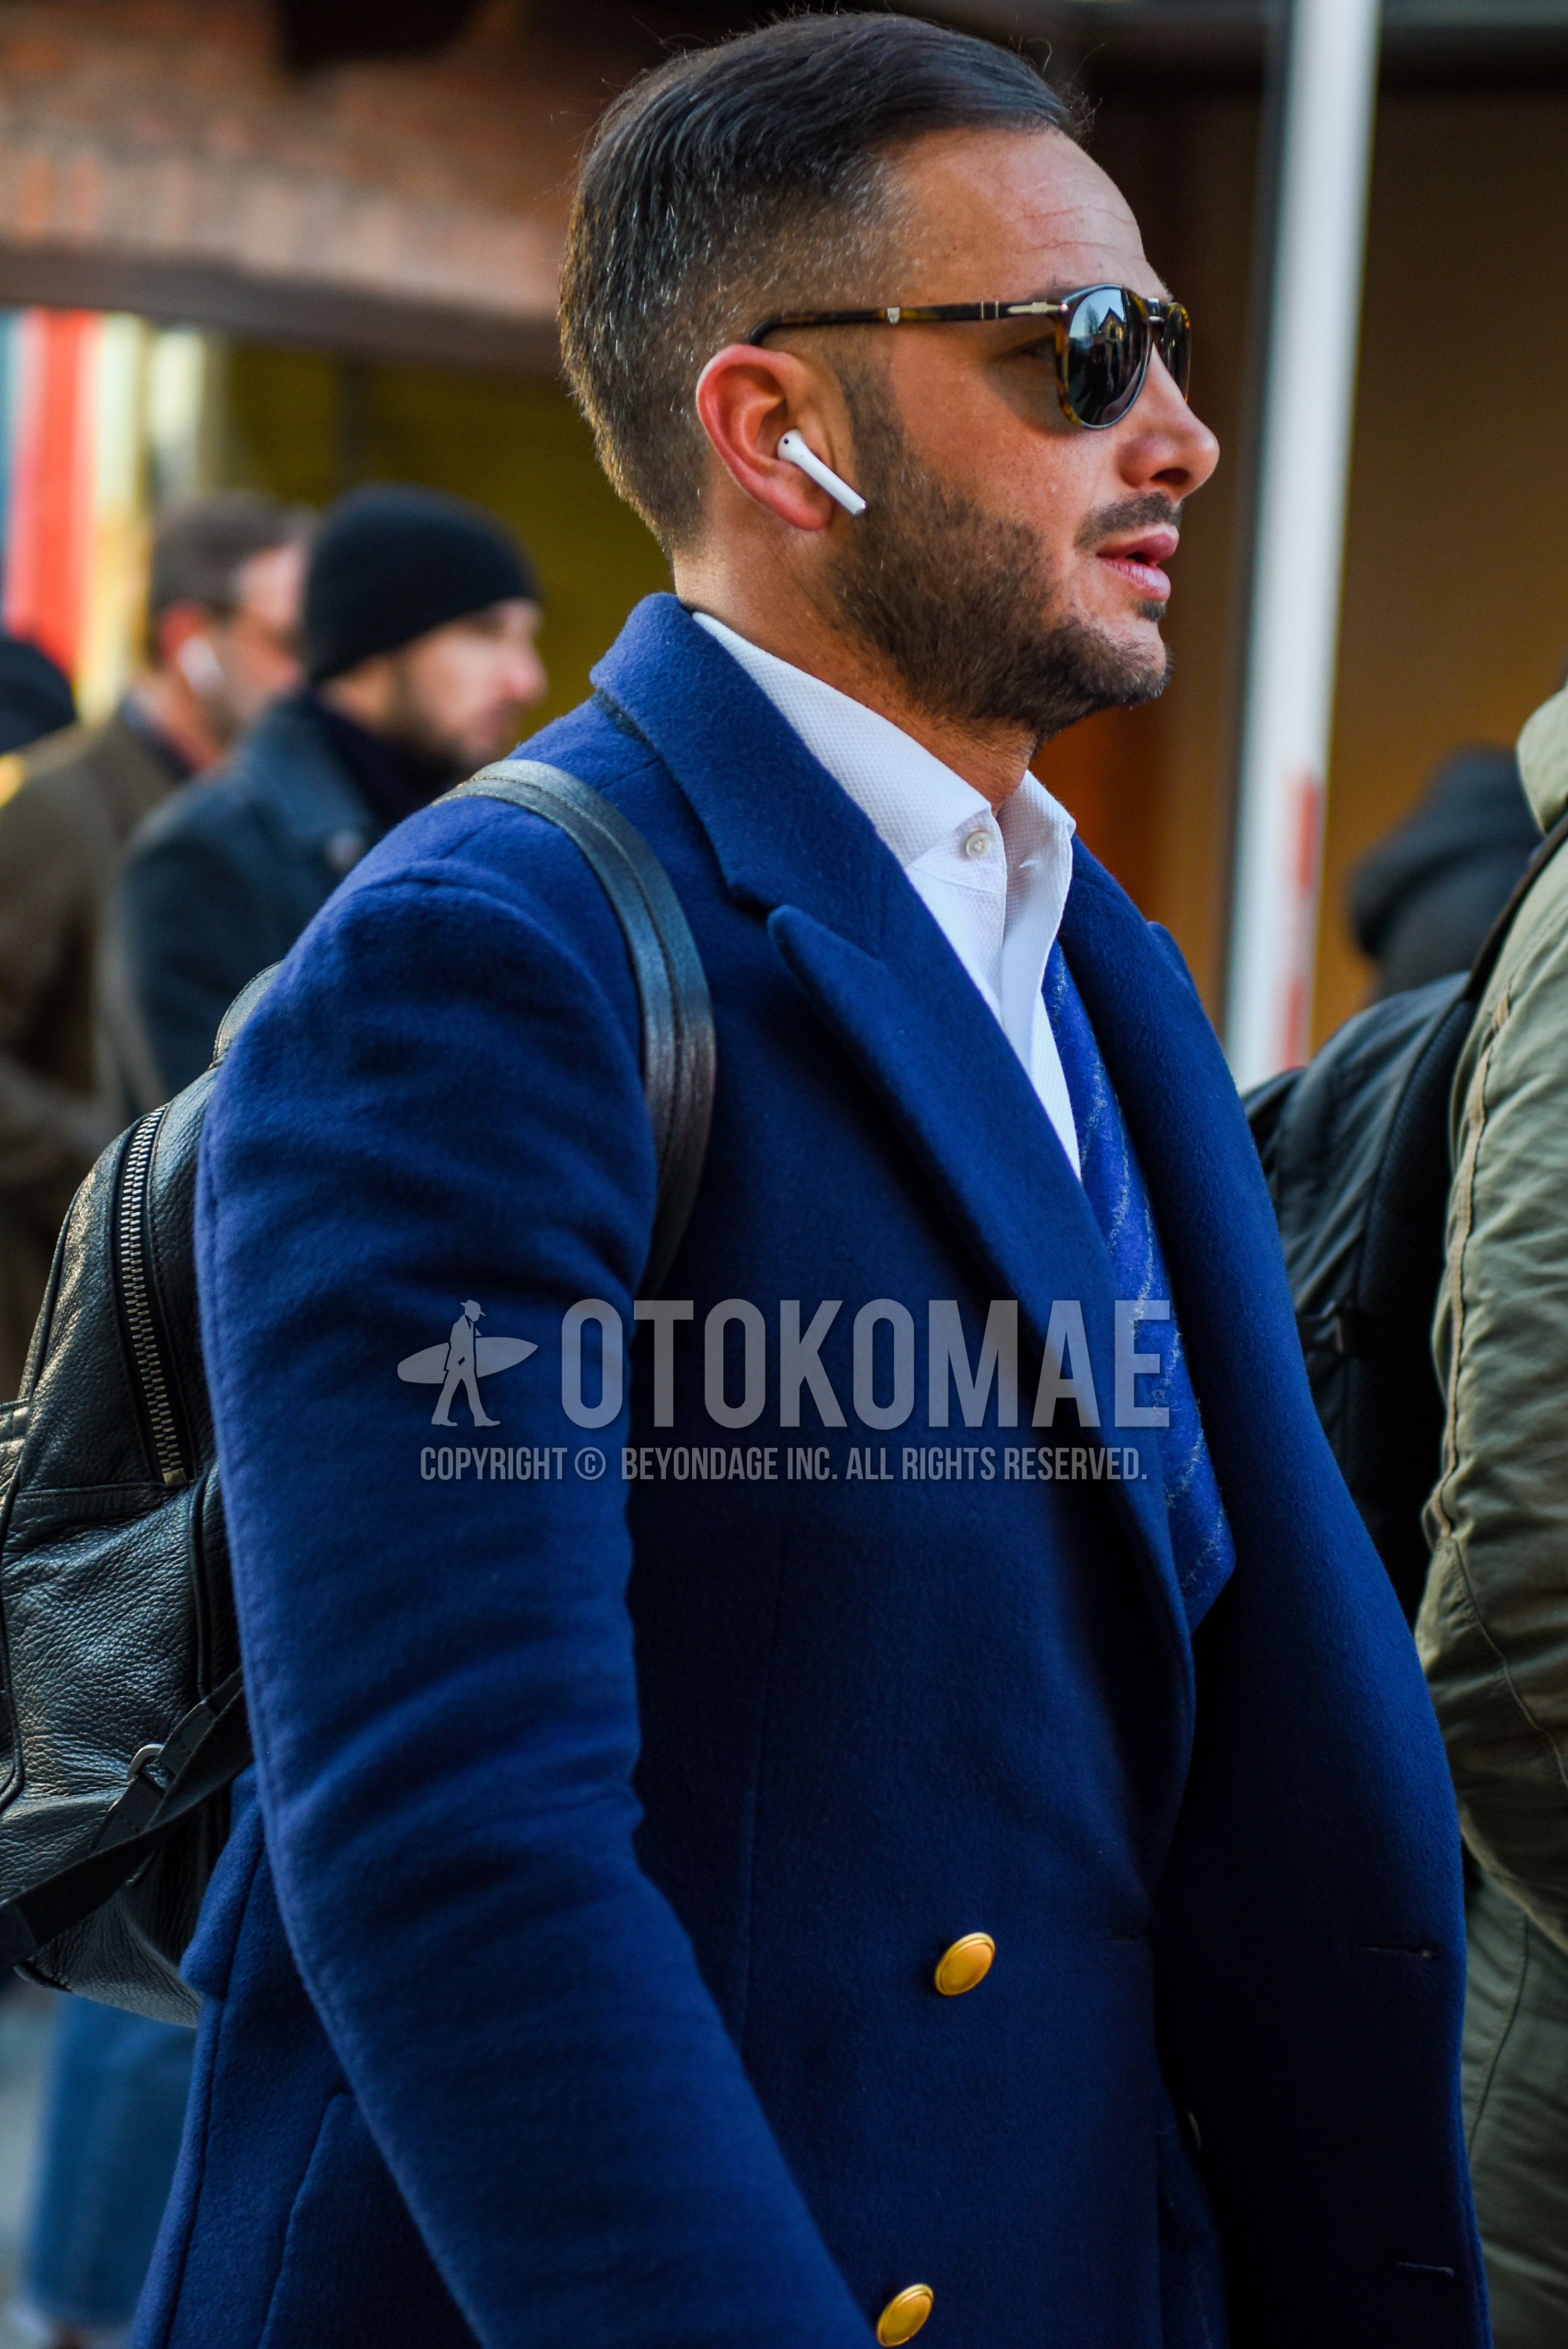 Men's autumn winter outfit with brown tortoiseshell sunglasses, navy plain chester coat, white plain shirt, navy stripes tailored jacket, black plain backpack.